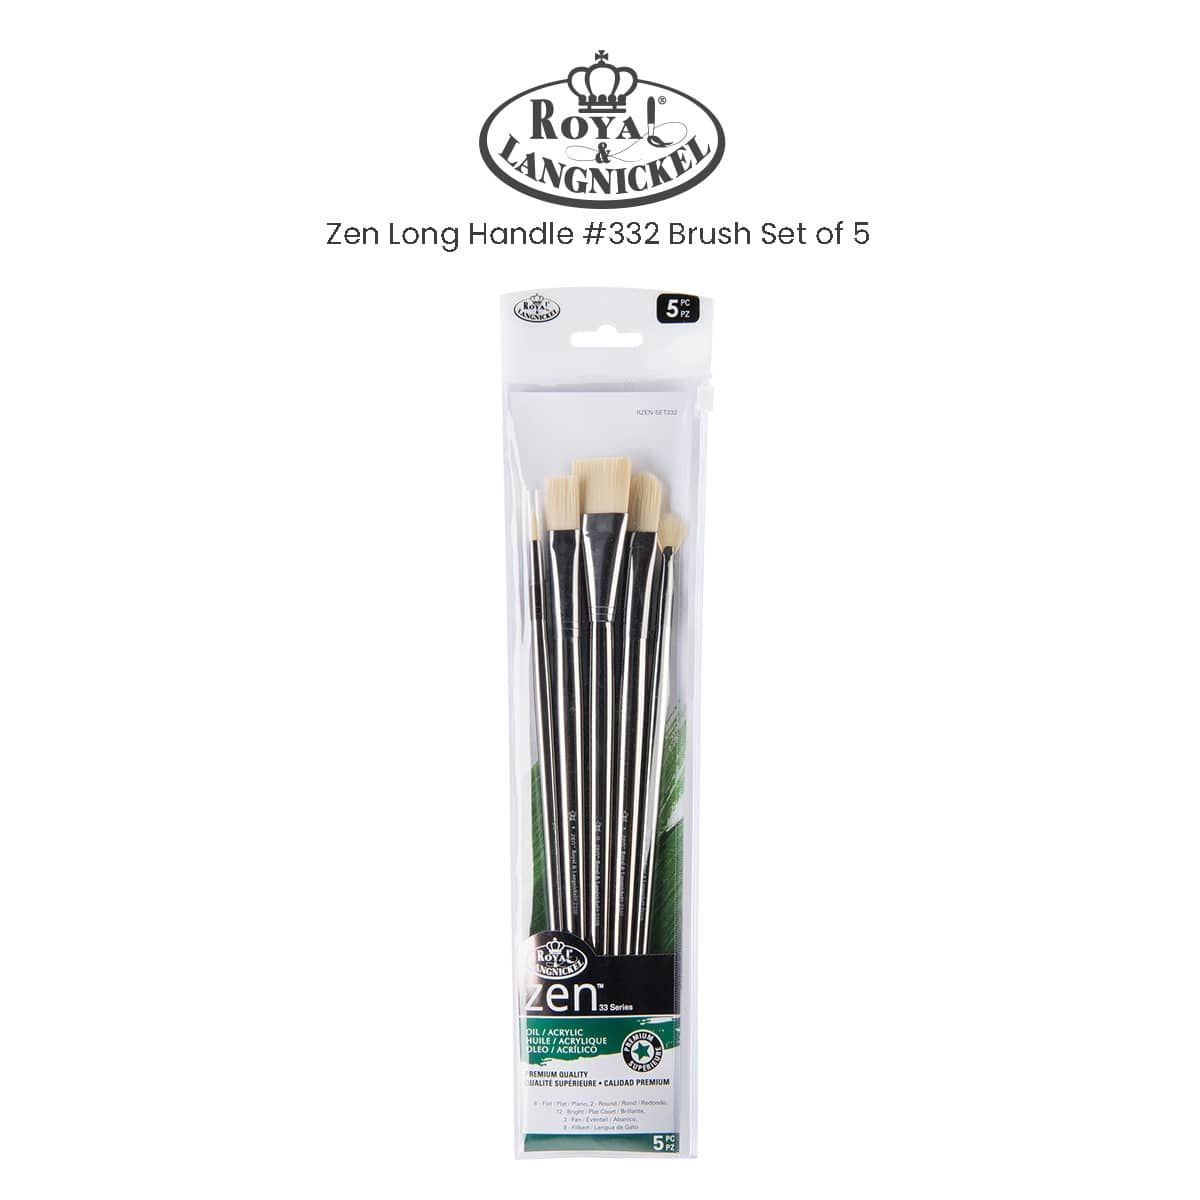 Royal & Langnickel Zen Brush Sets